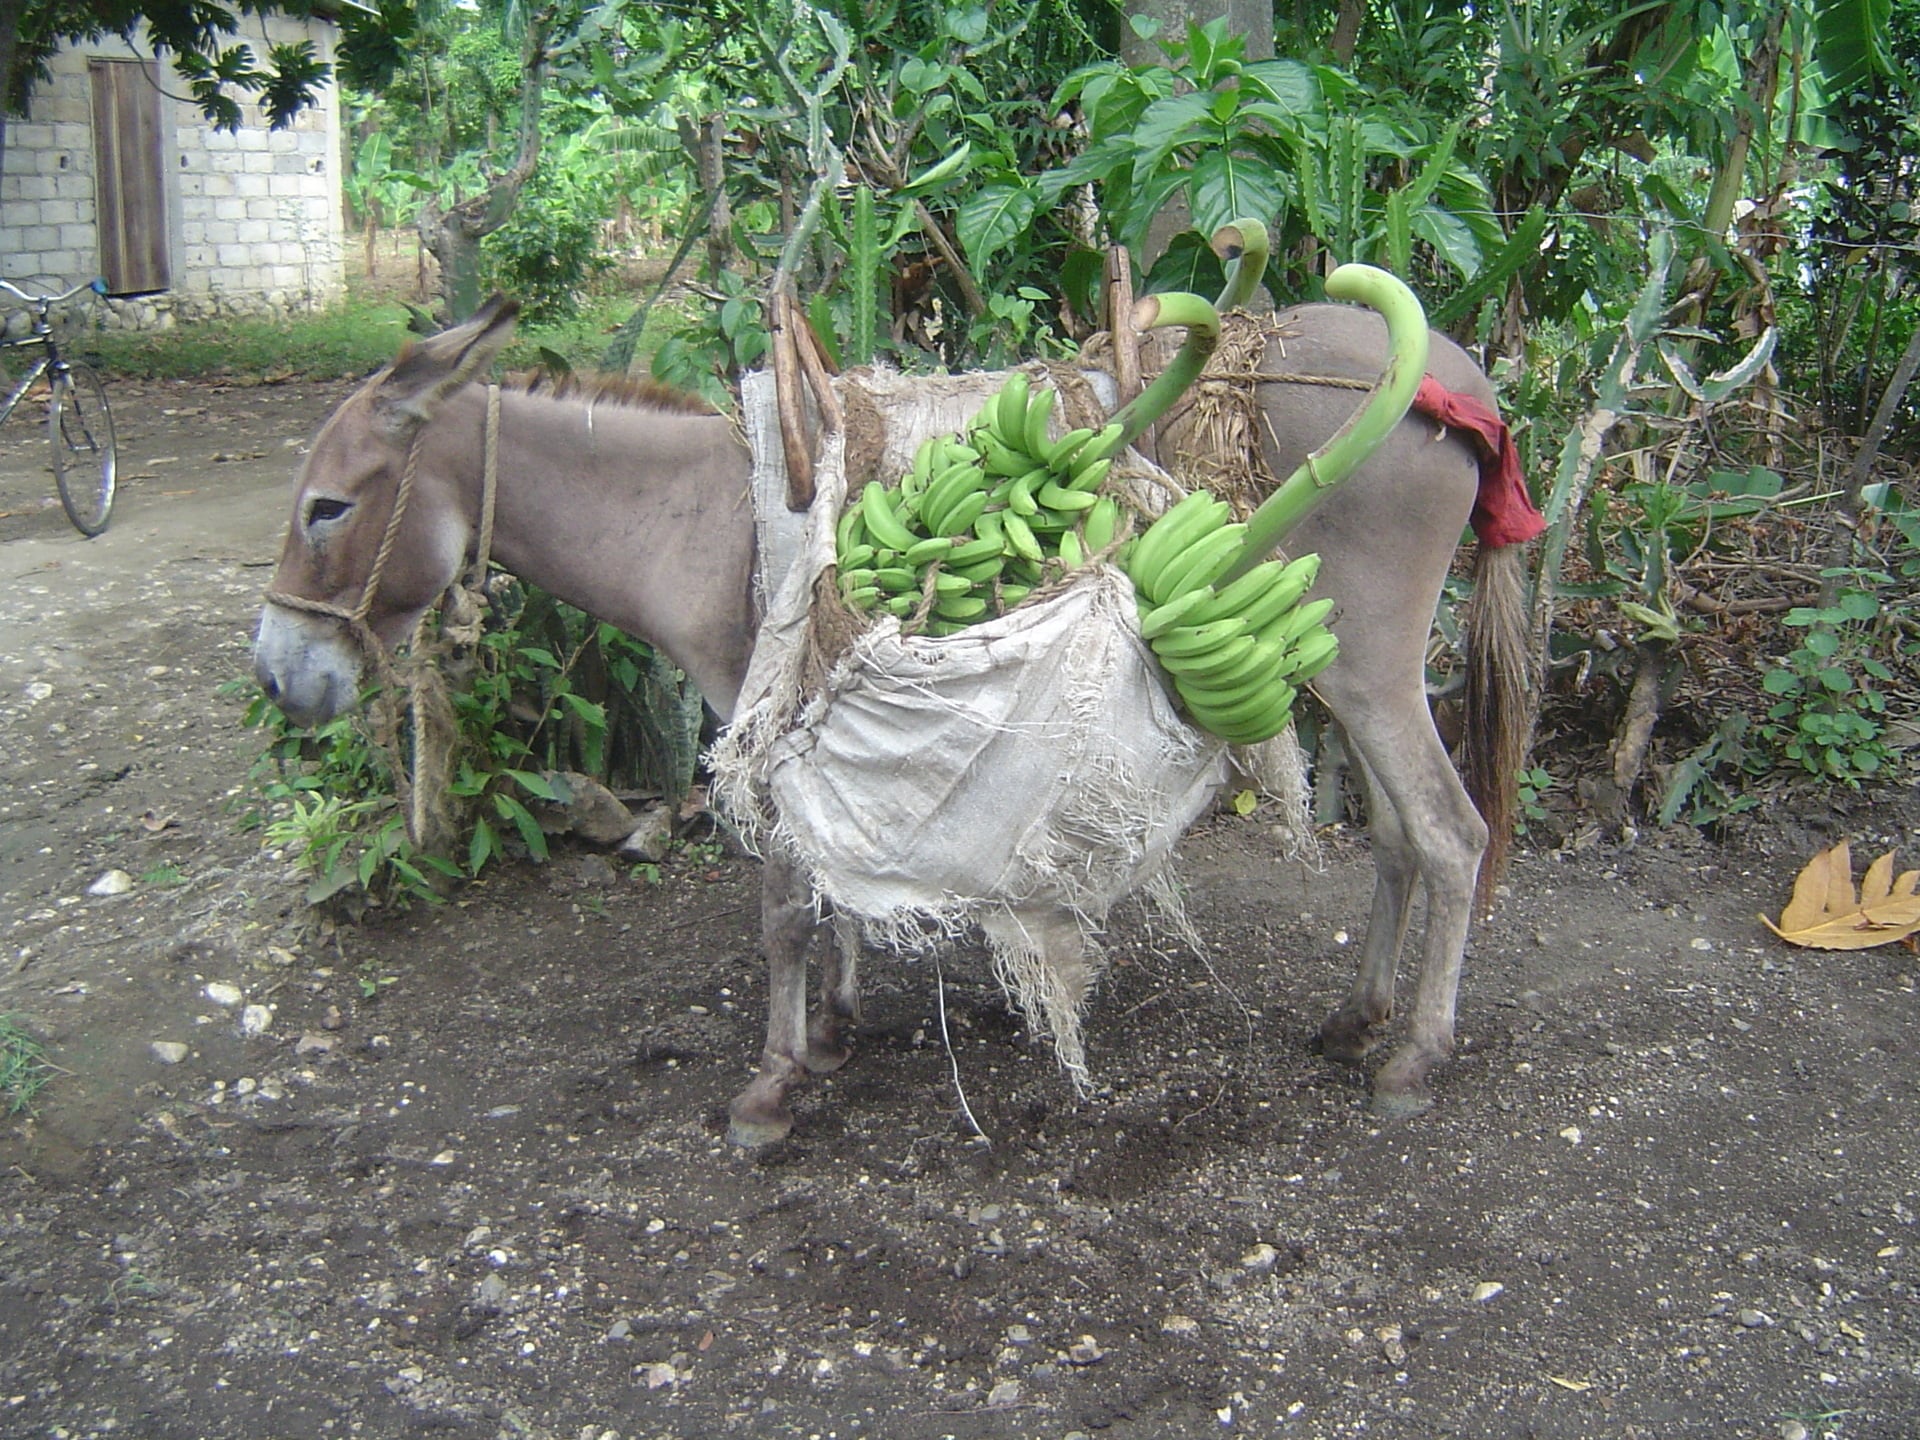 A donkey packs bananas